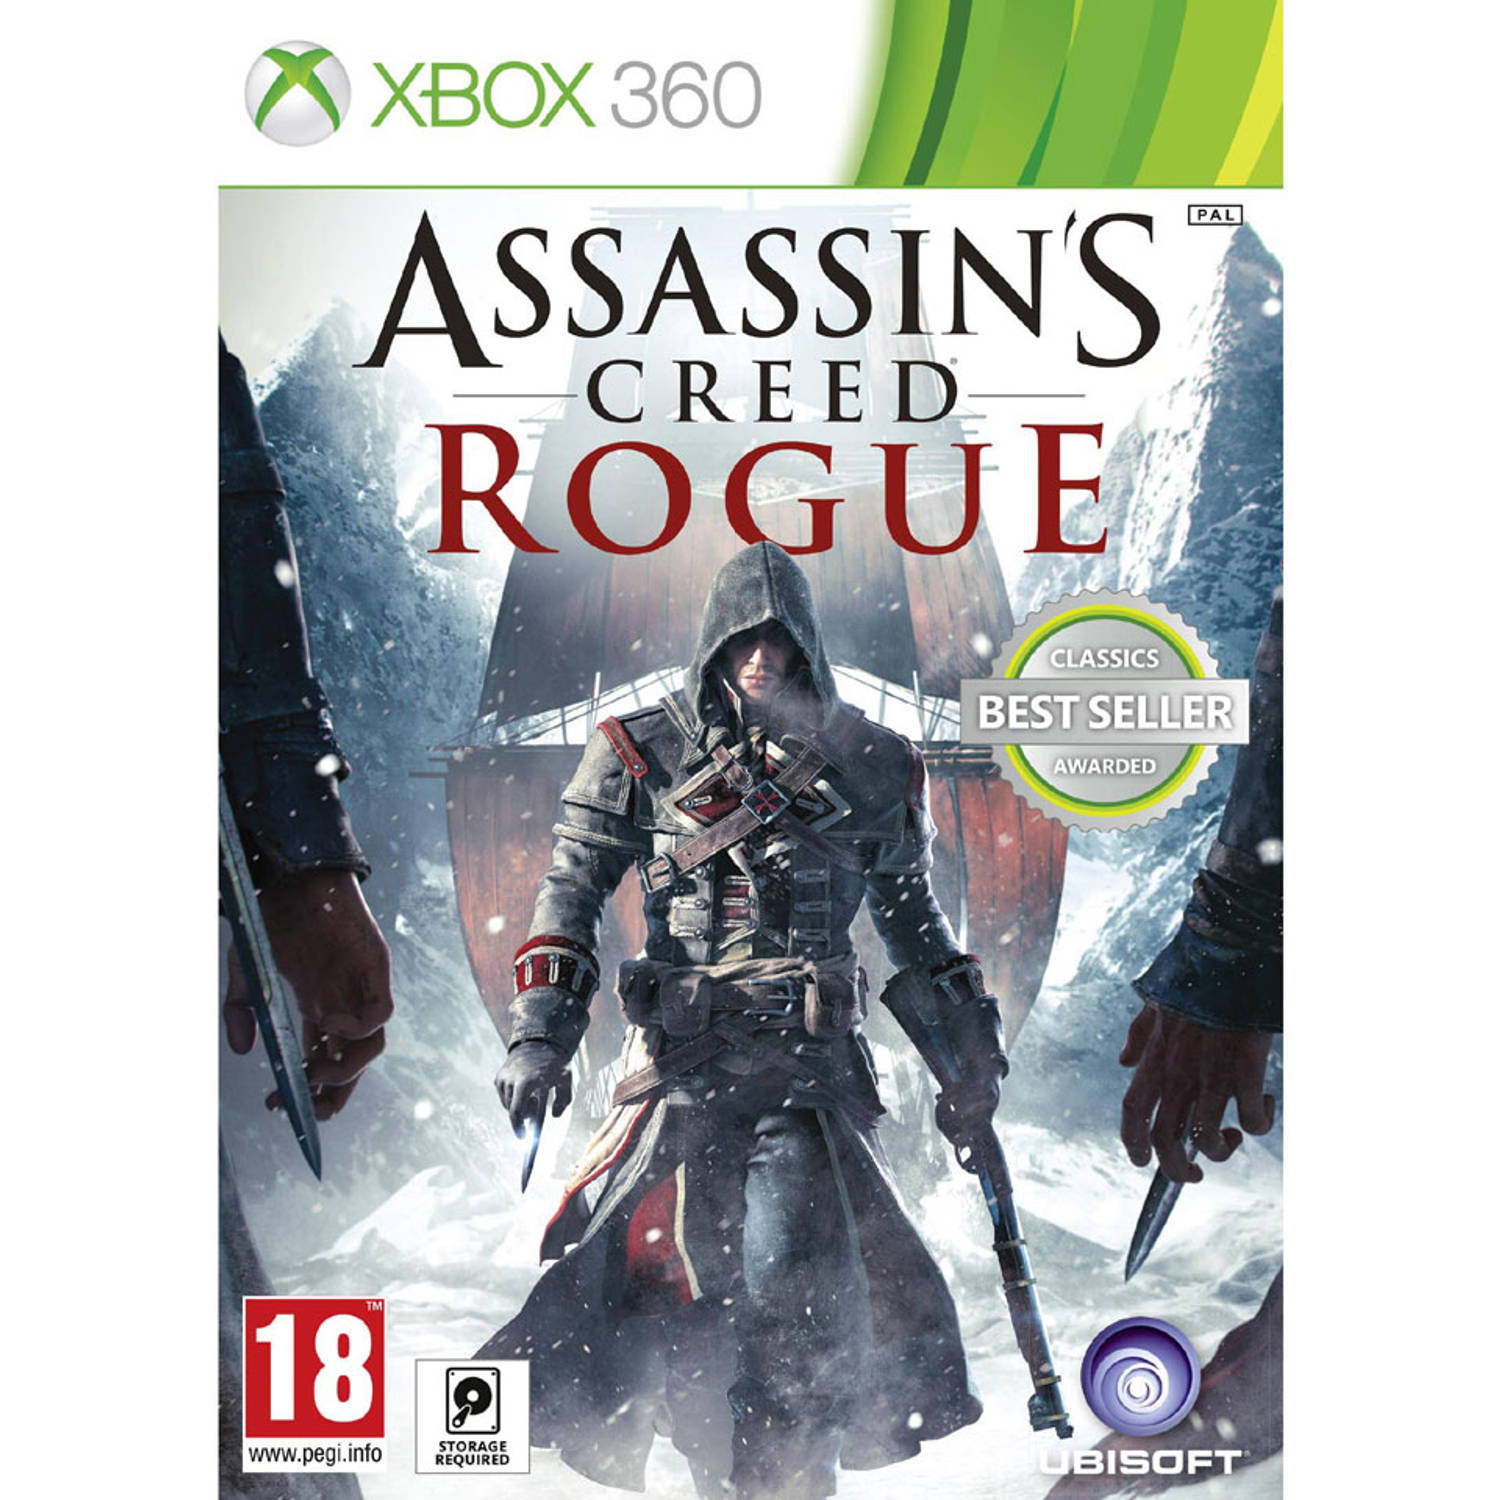 Xbox 360 Assassin’s Creed: Rogue